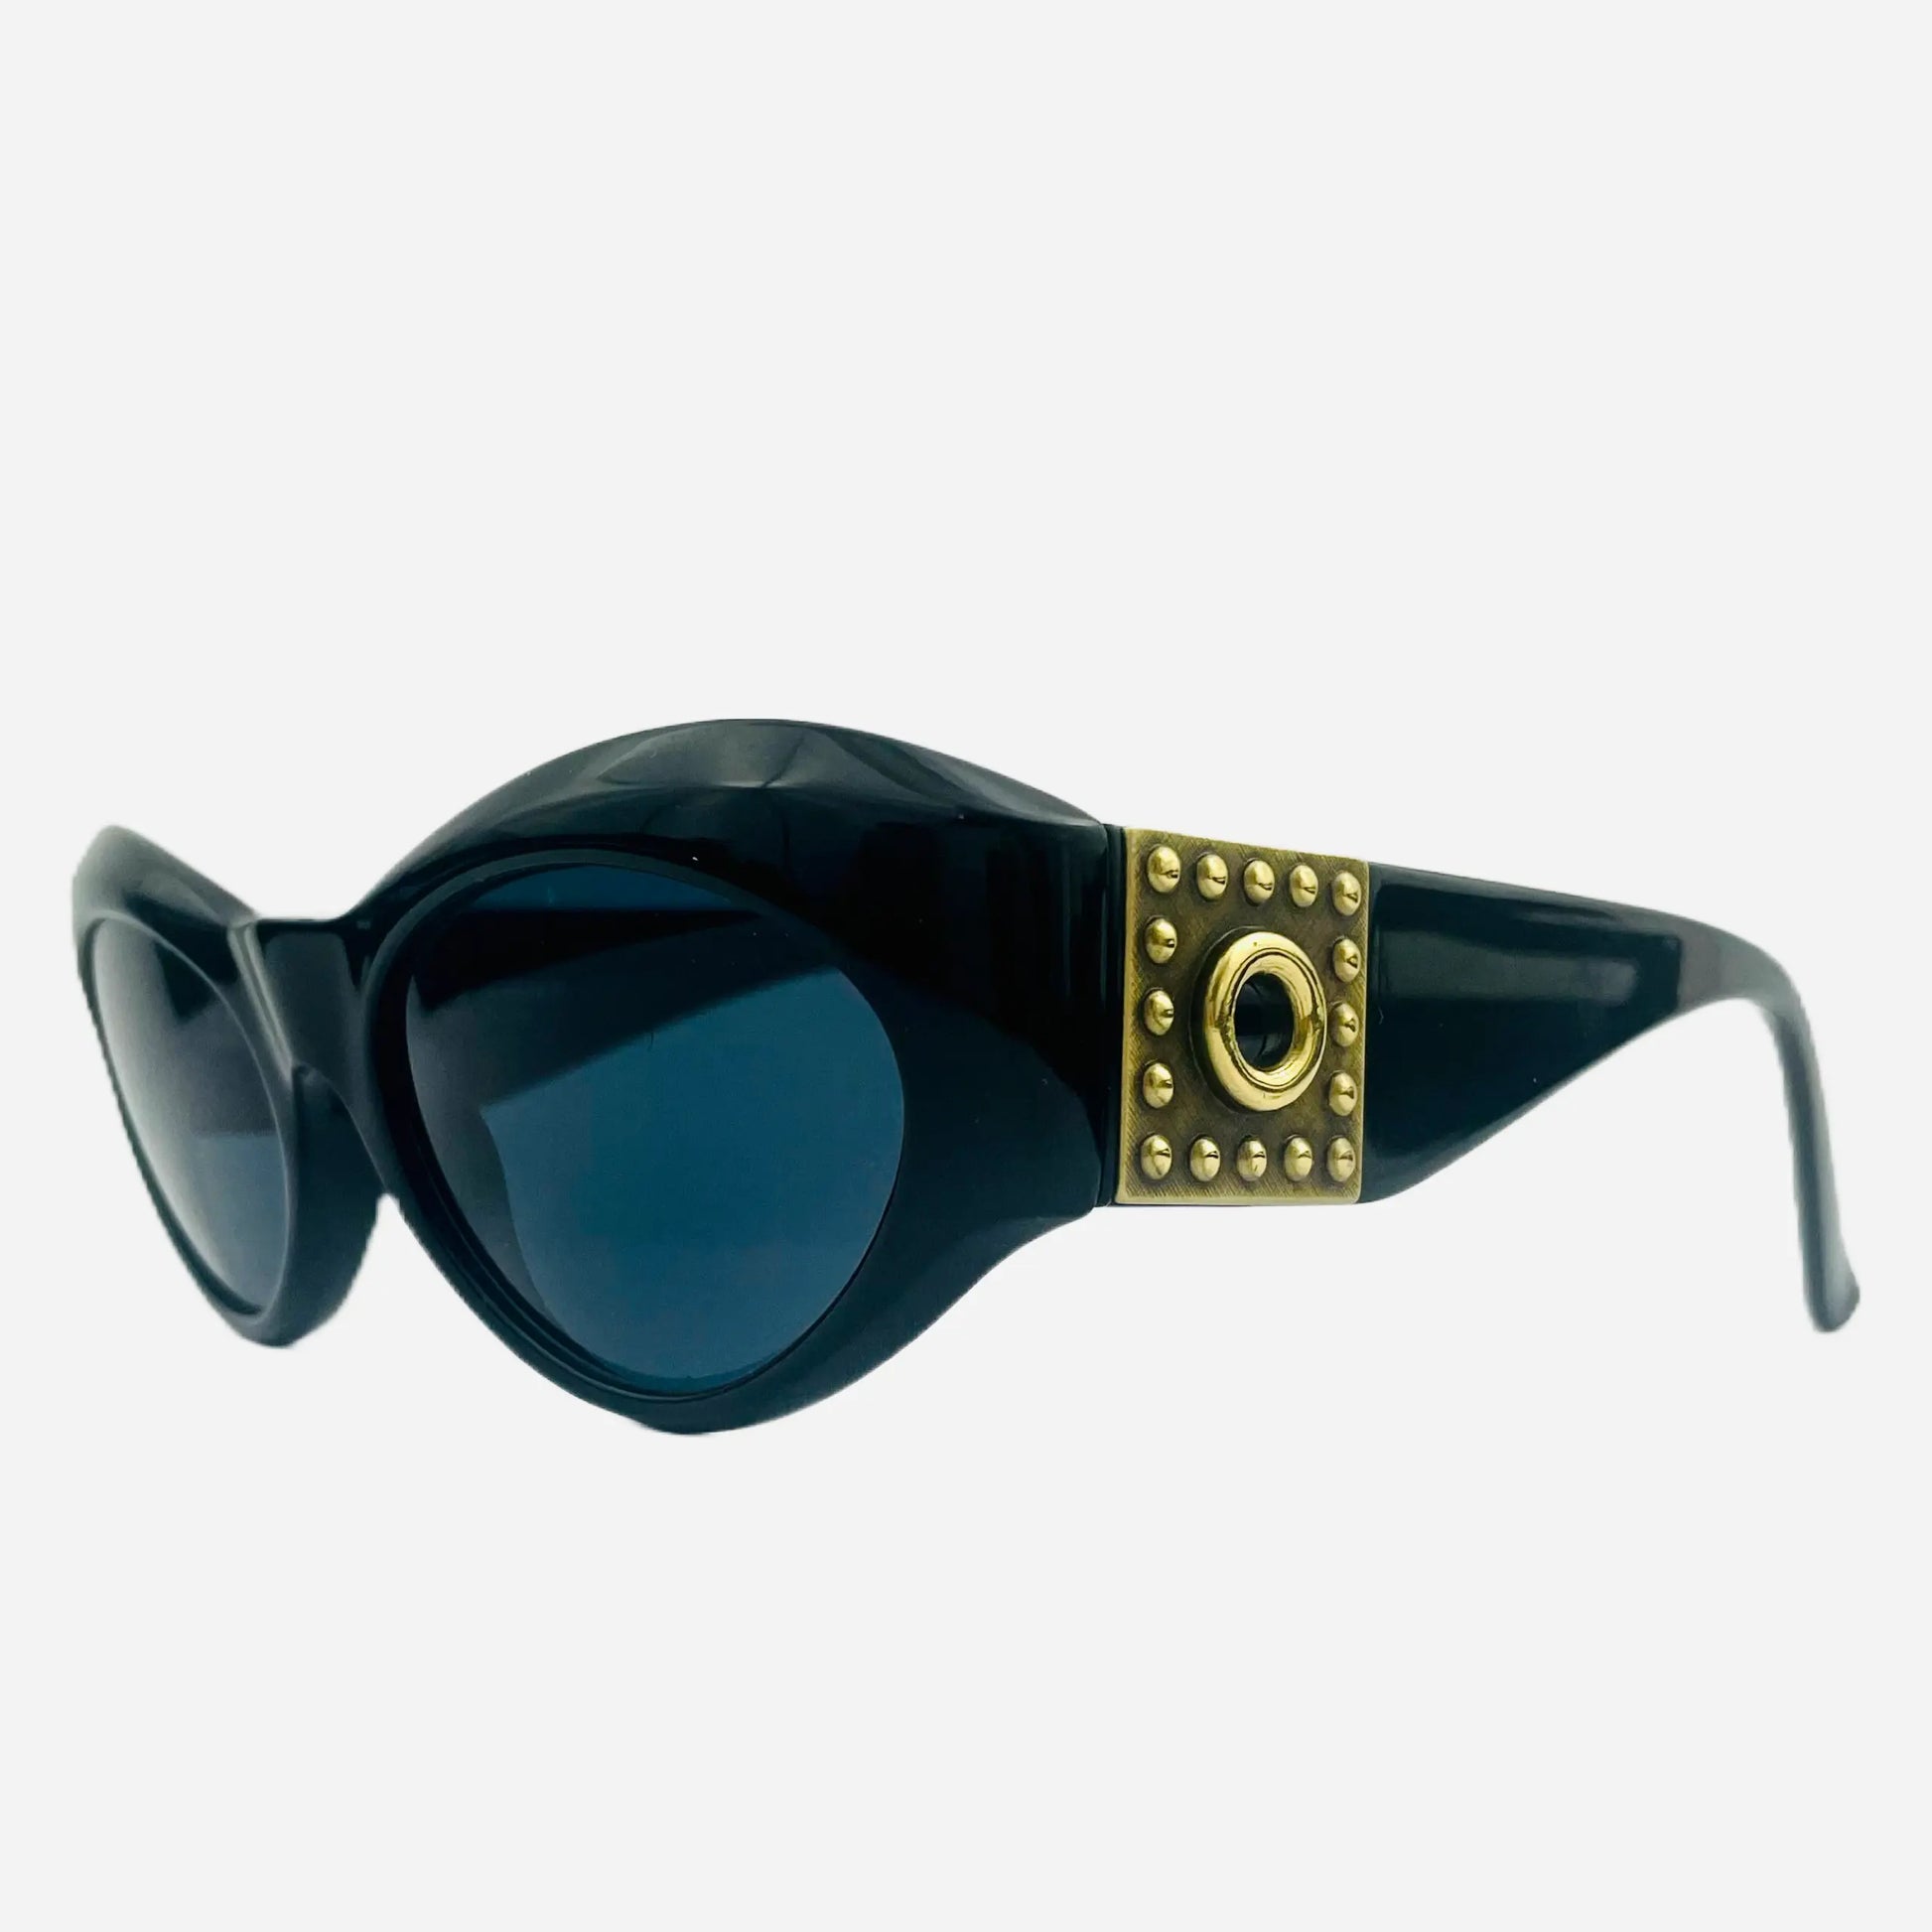 Vintage-Gianni-Versace-Sonnenbrille-Sunglasses-394-front-side